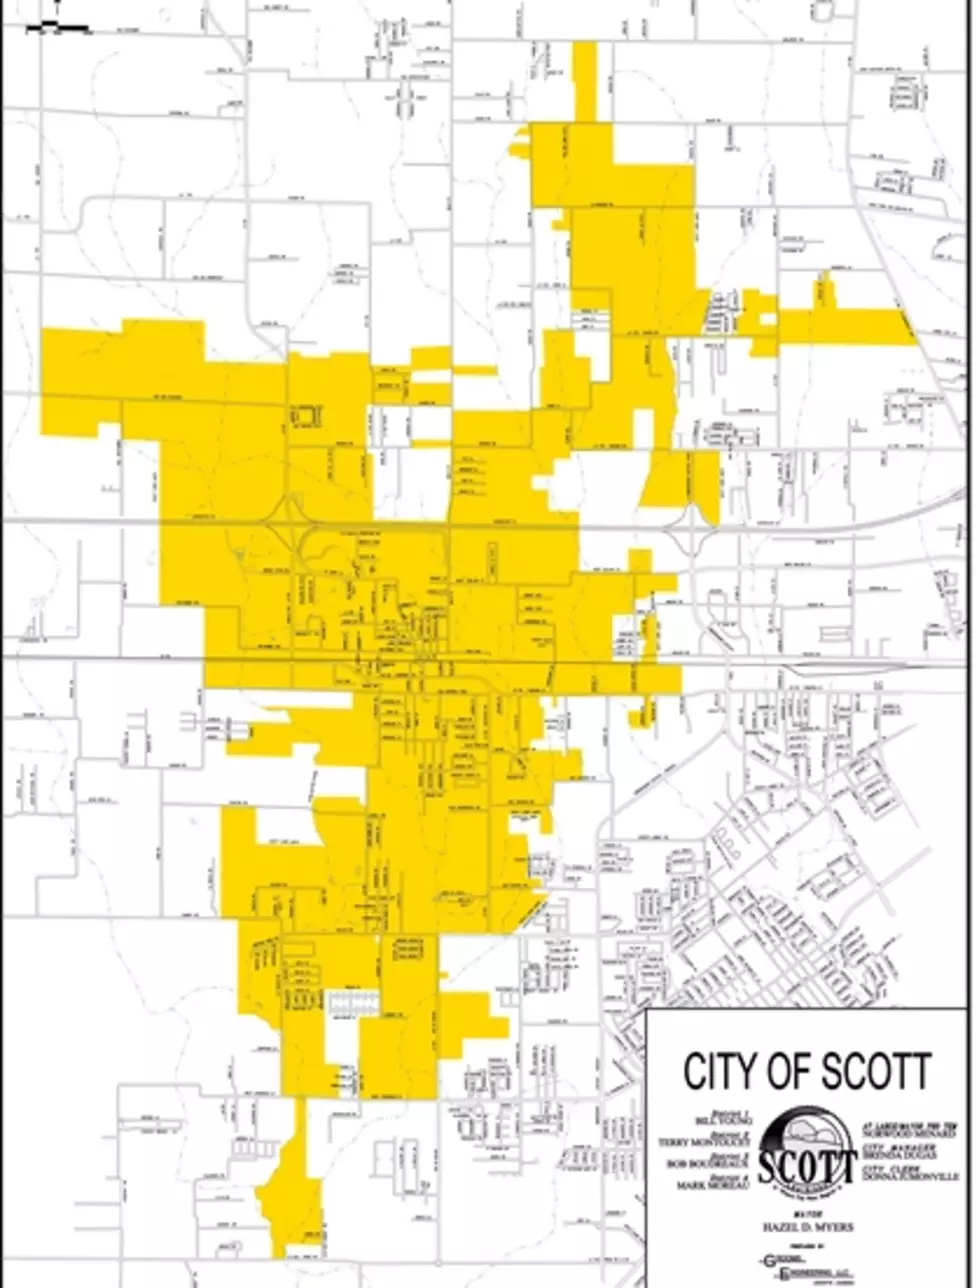 Scott Cleanest City